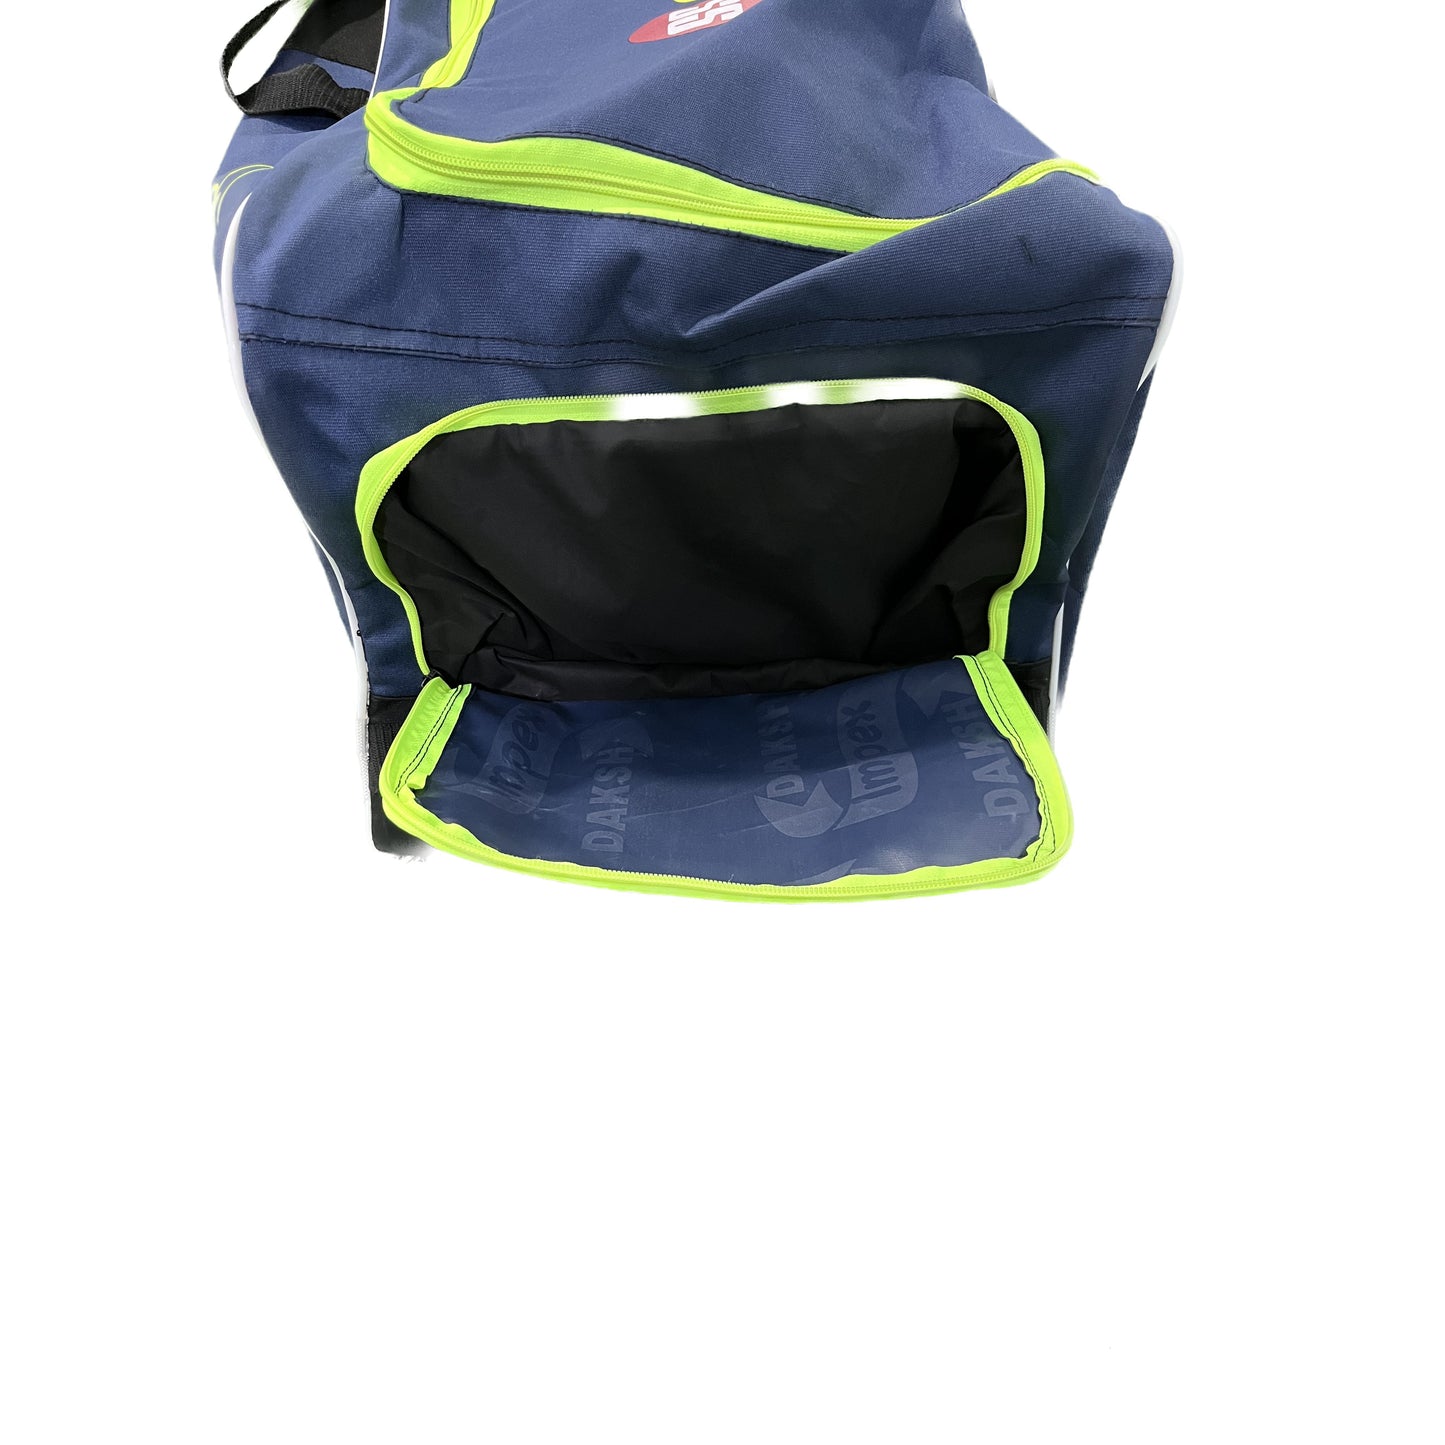 SS Blaster Green Navy Cricket Kit Bag with wheels